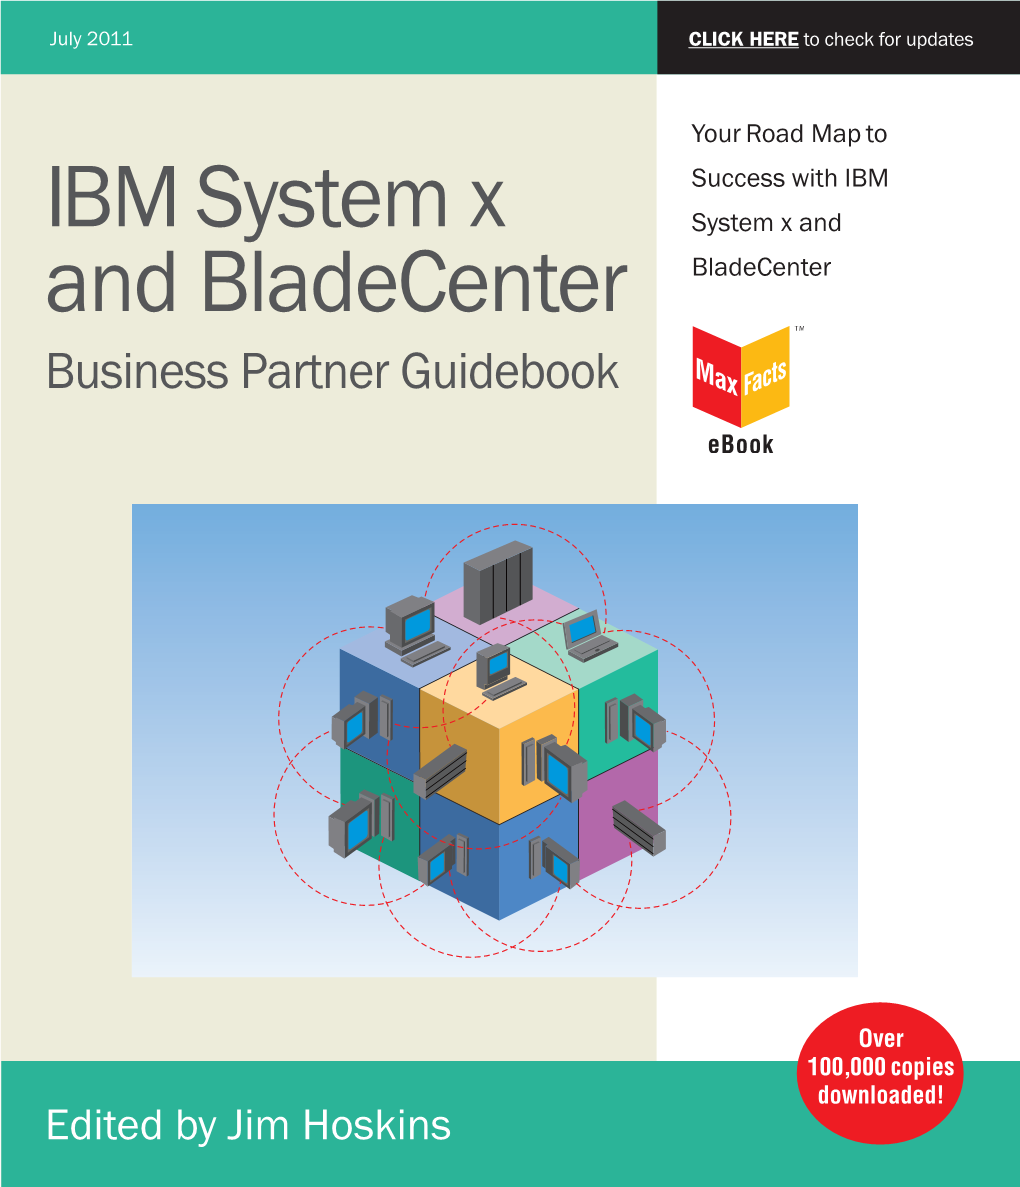 IBM System X and Bladecenter Business Partner Guidebook Titles of Interest